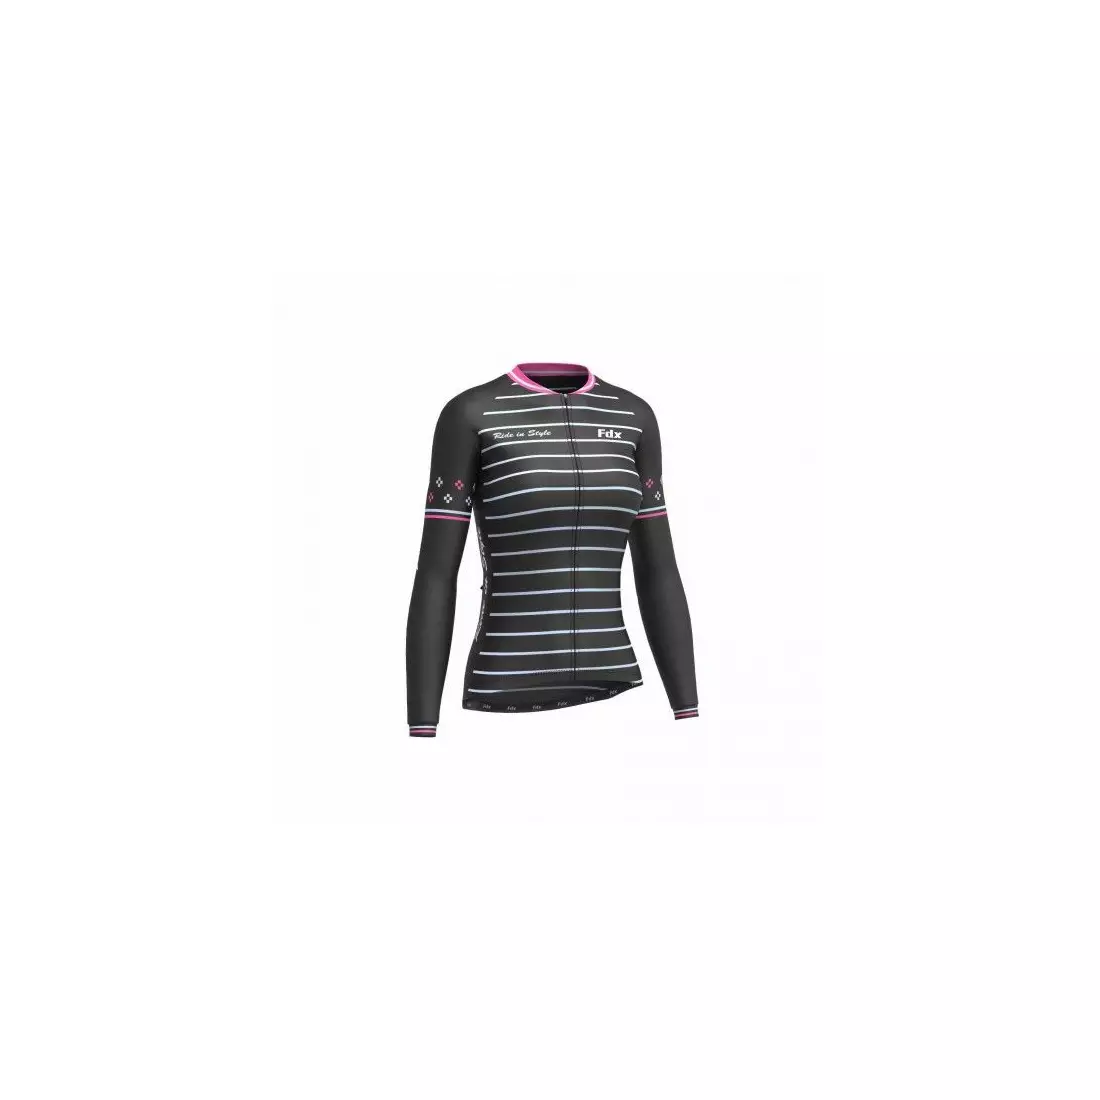  FDX 1480 Women's insulated cycling sweatshirt, black and pink